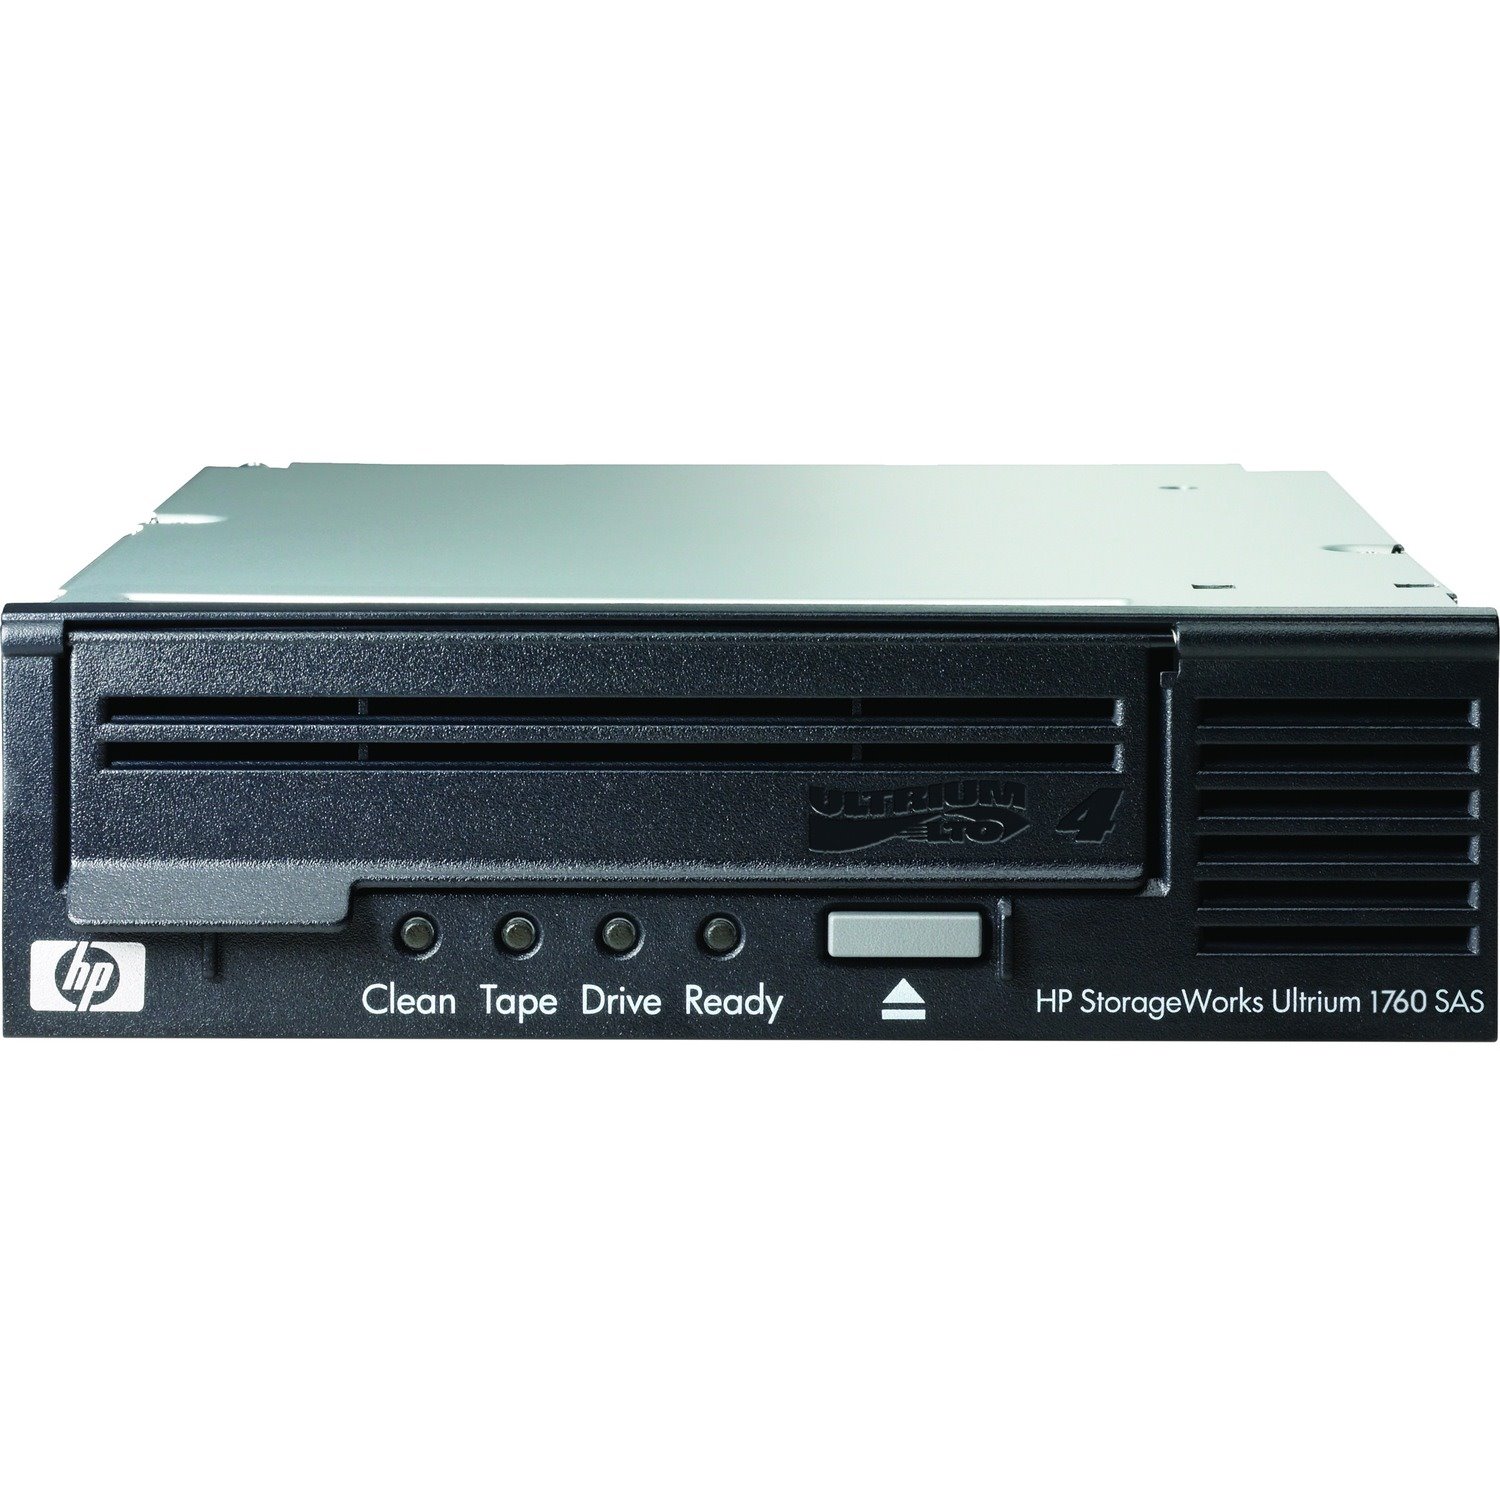 HPE LTO-4 Tape Drive - Refurbished - 800 GB (Native)/1.60 TB (Compressed)